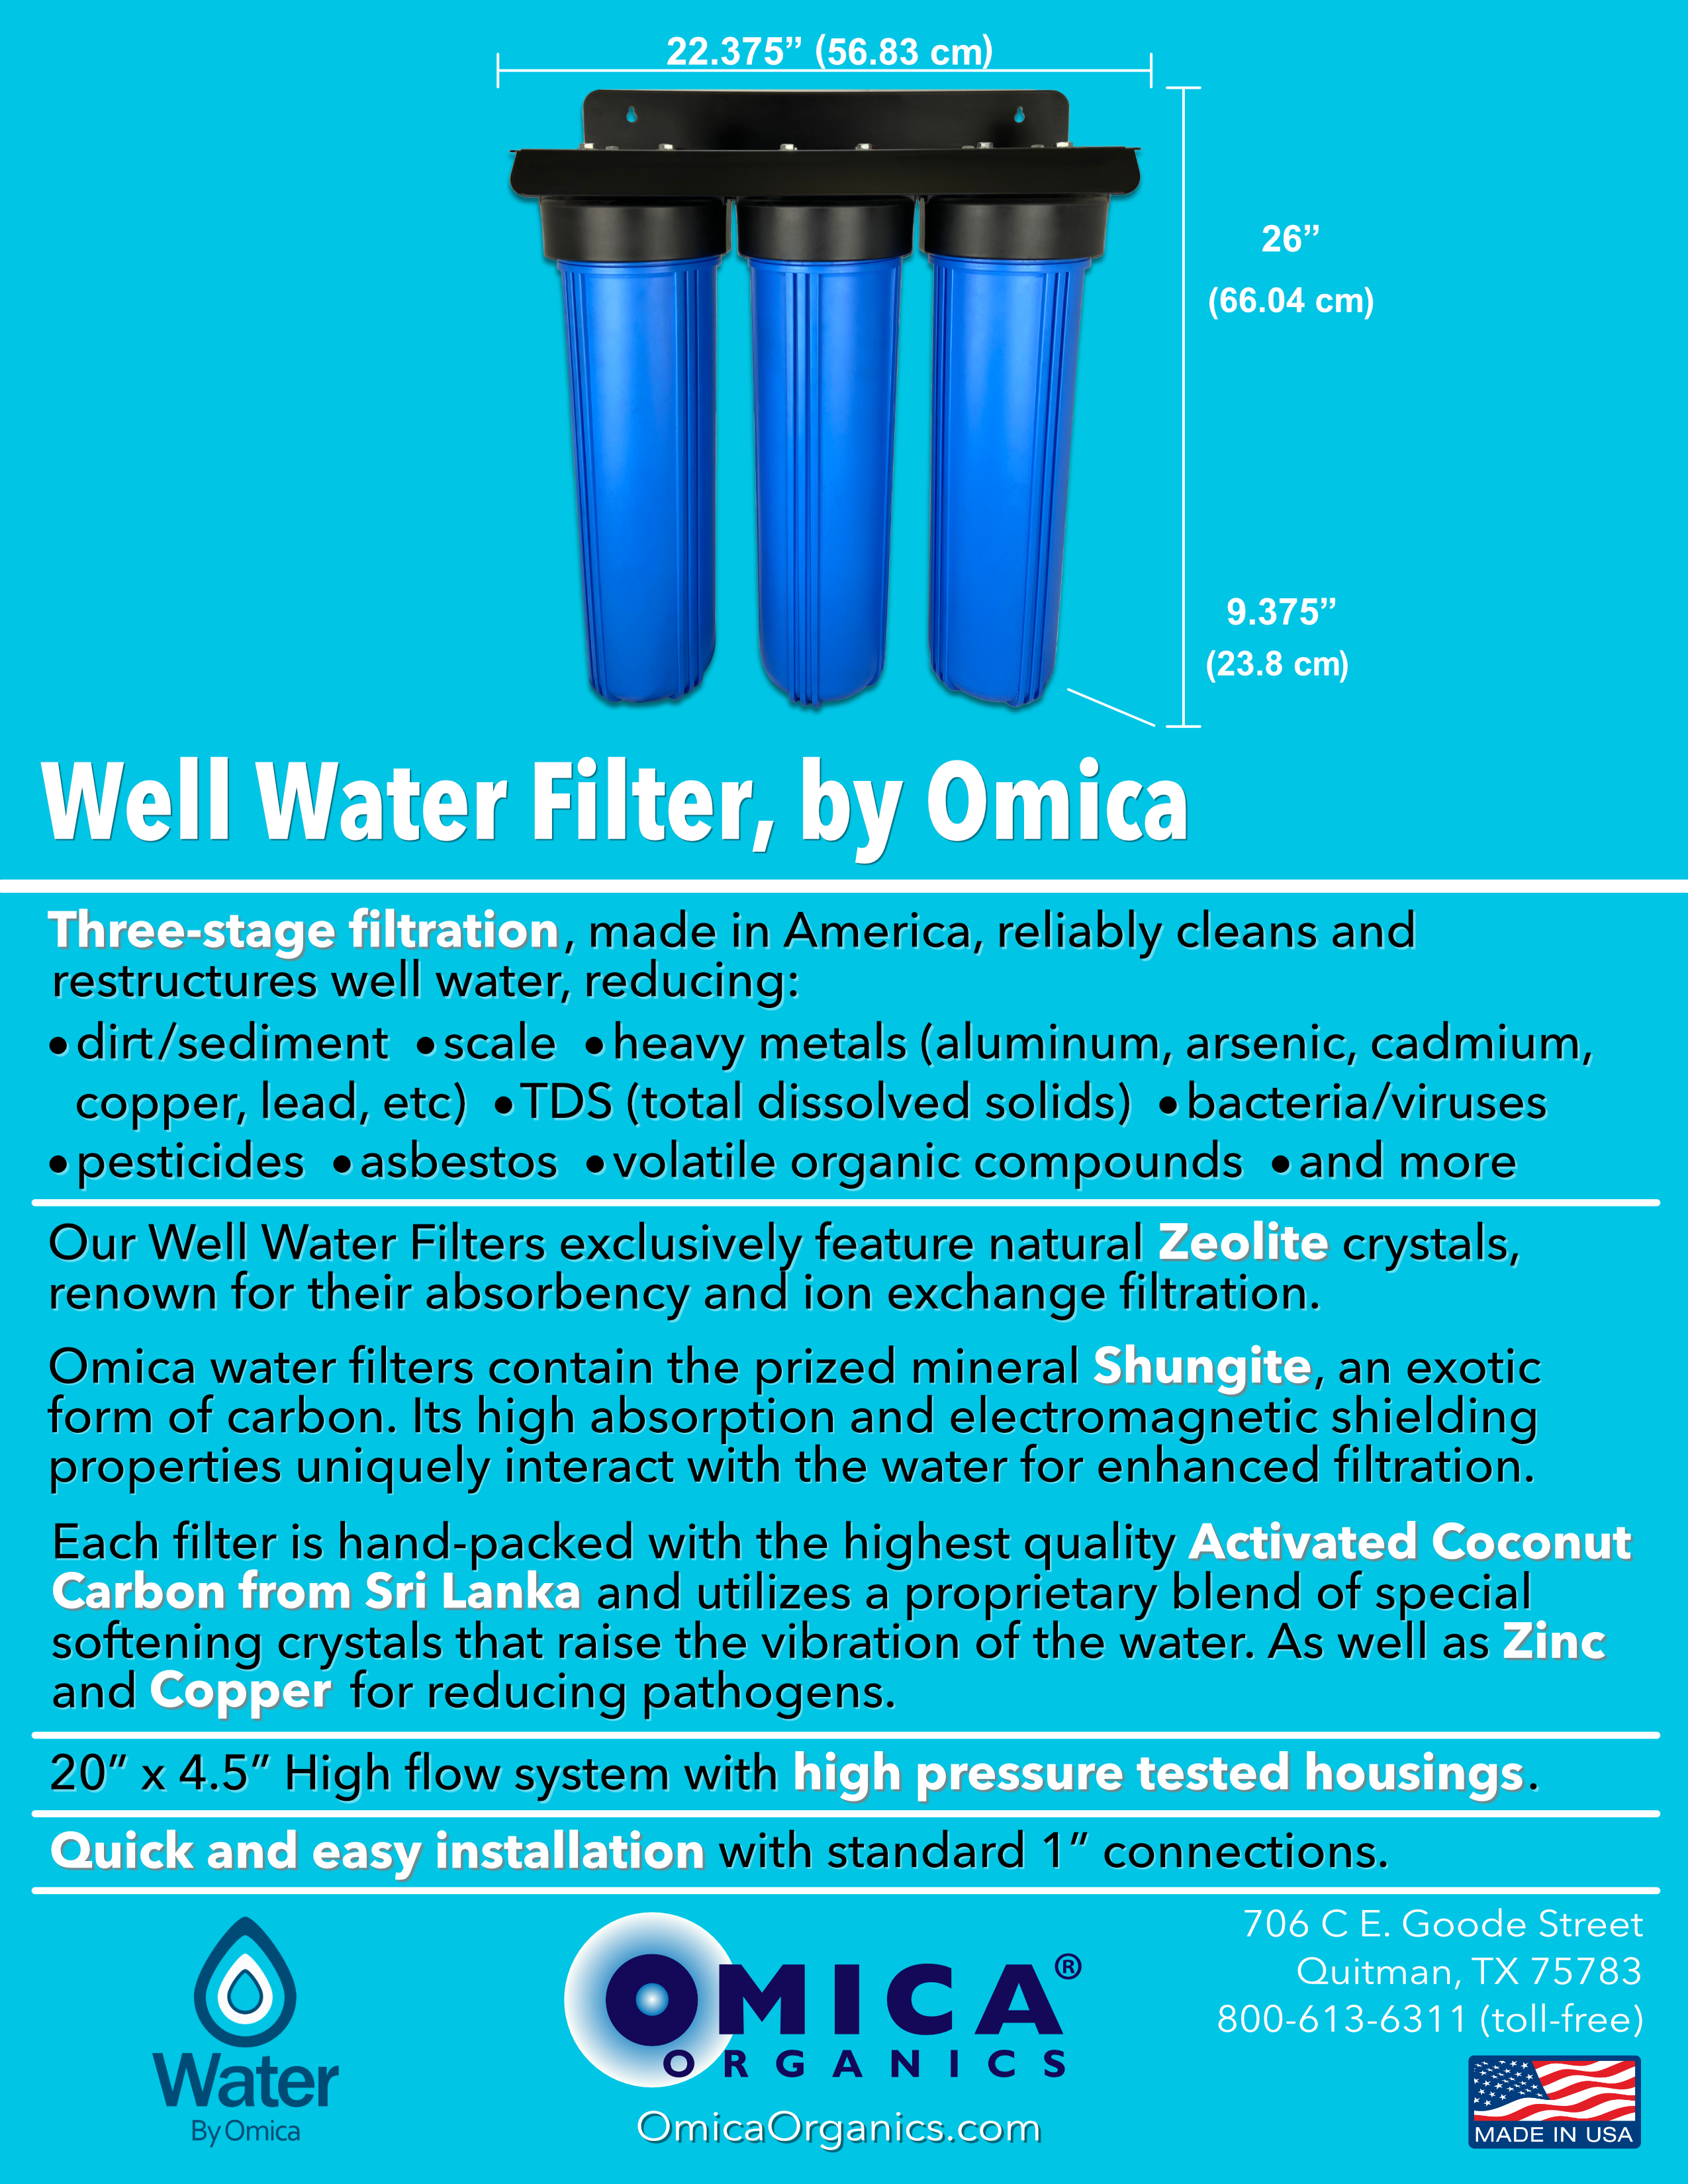 Omica Shower Filter - Omica Organics